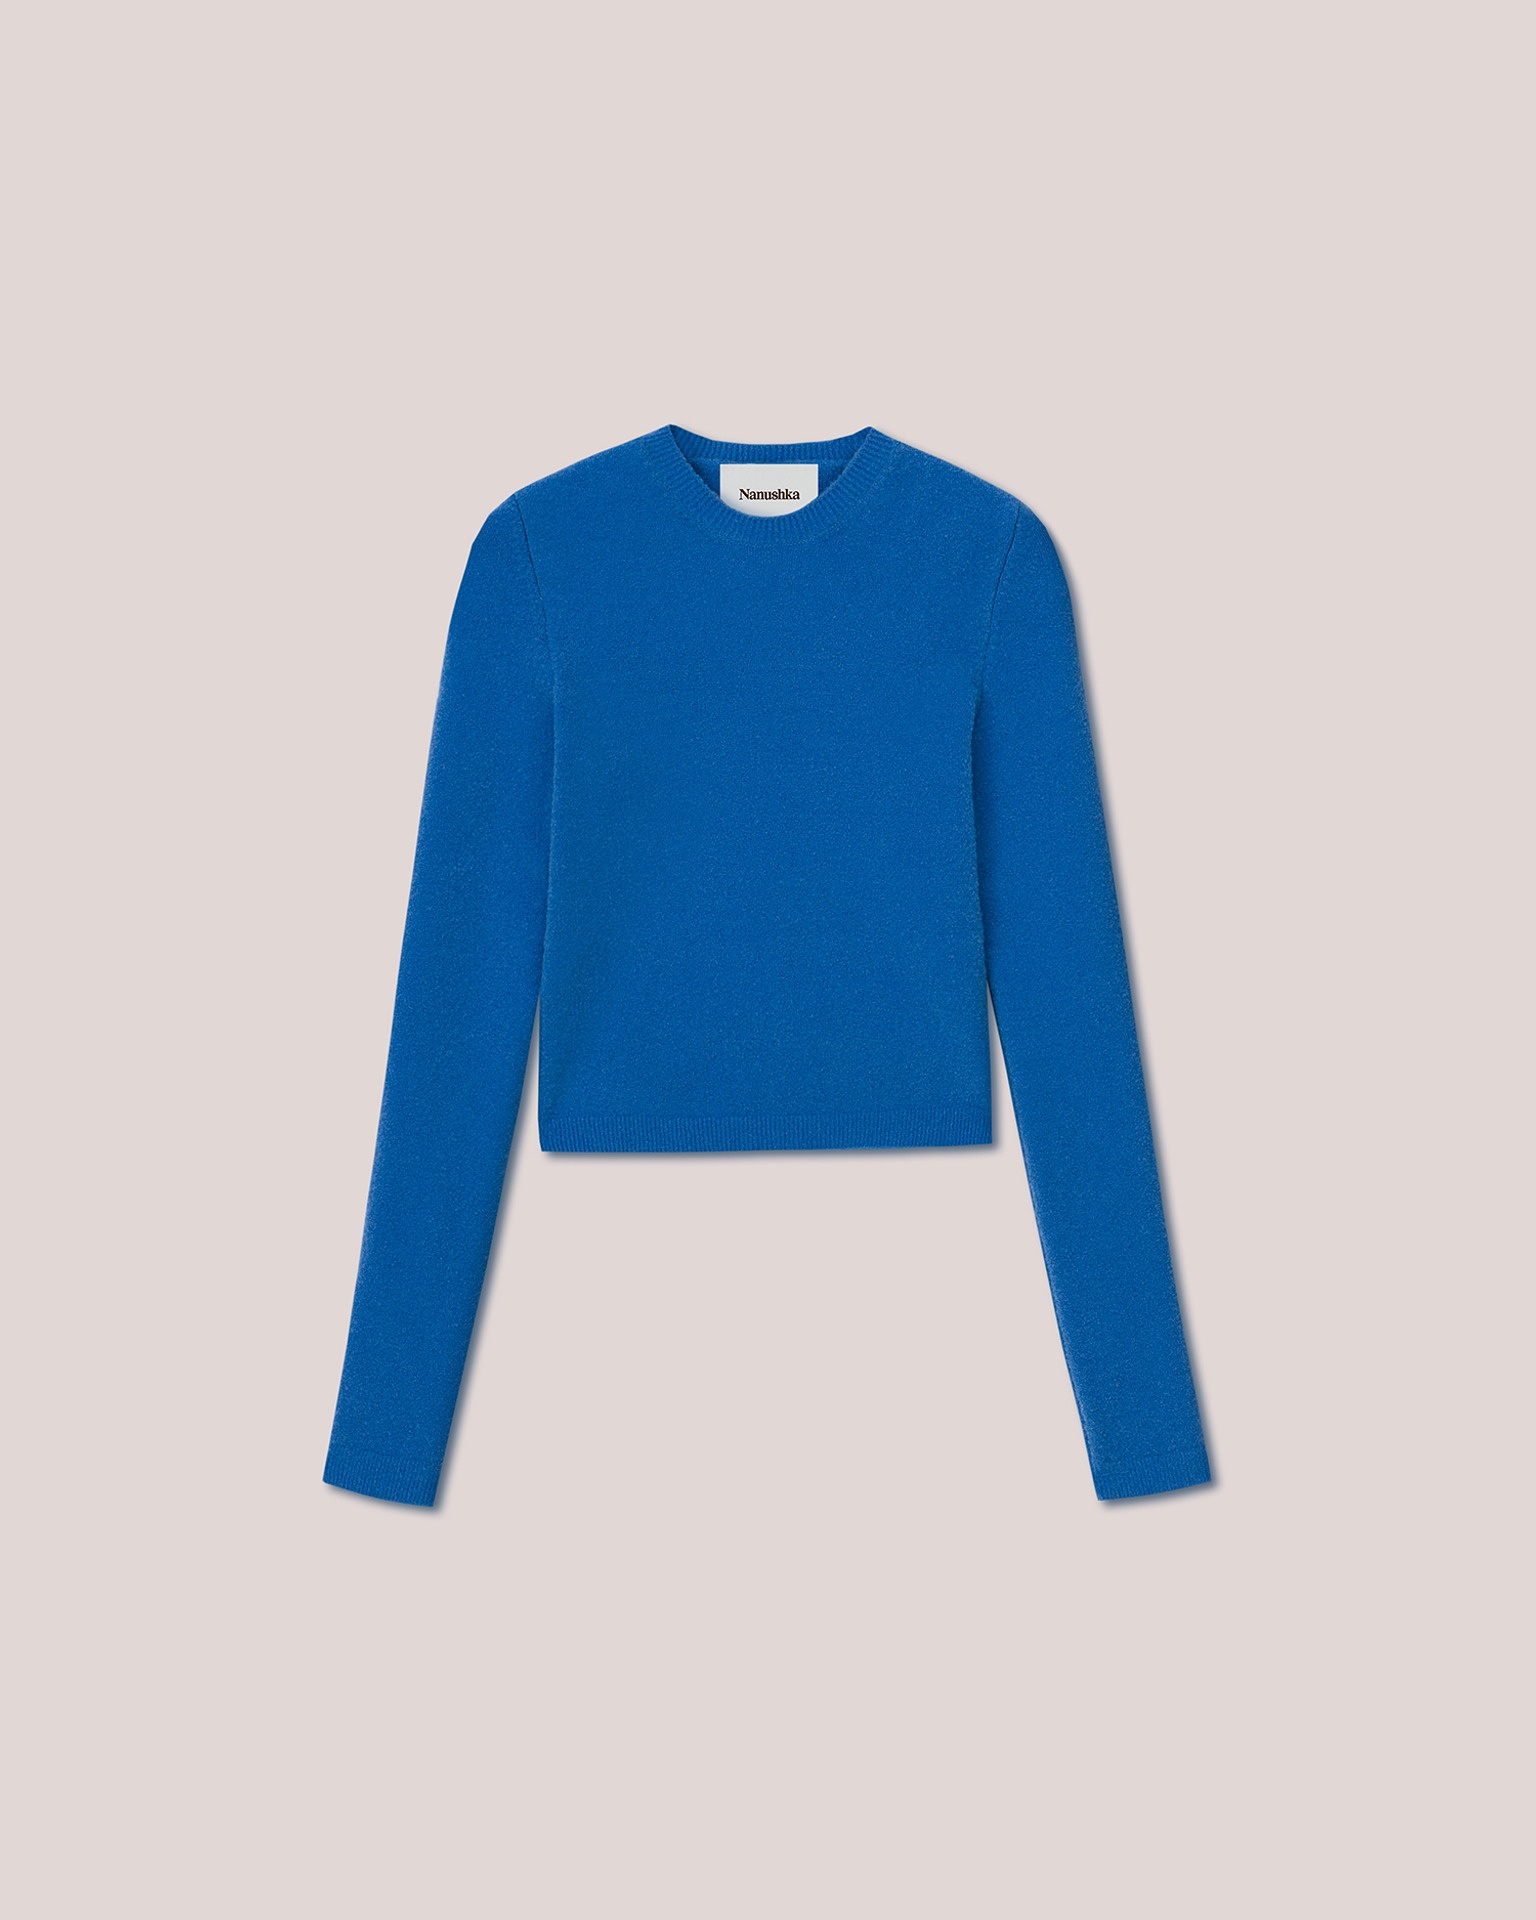 TAMA - Slim fit crew neck sweater - Blue - 1